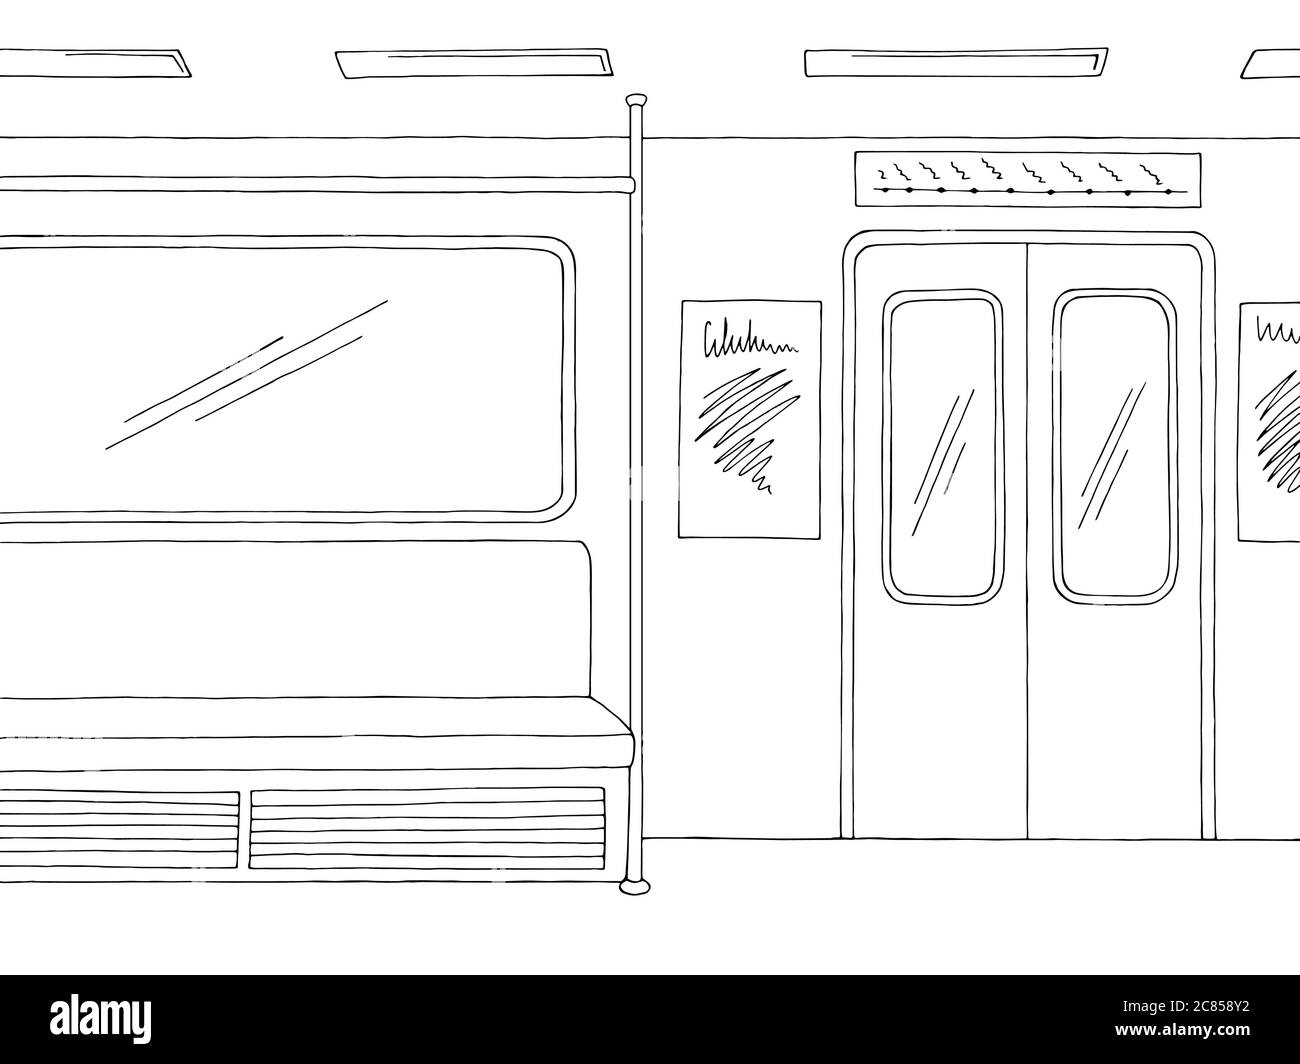 2900 Metro Train Illustrations RoyaltyFree Vector Graphics  Clip Art   iStock  Los angeles metro train Metro train dubai Metro train door